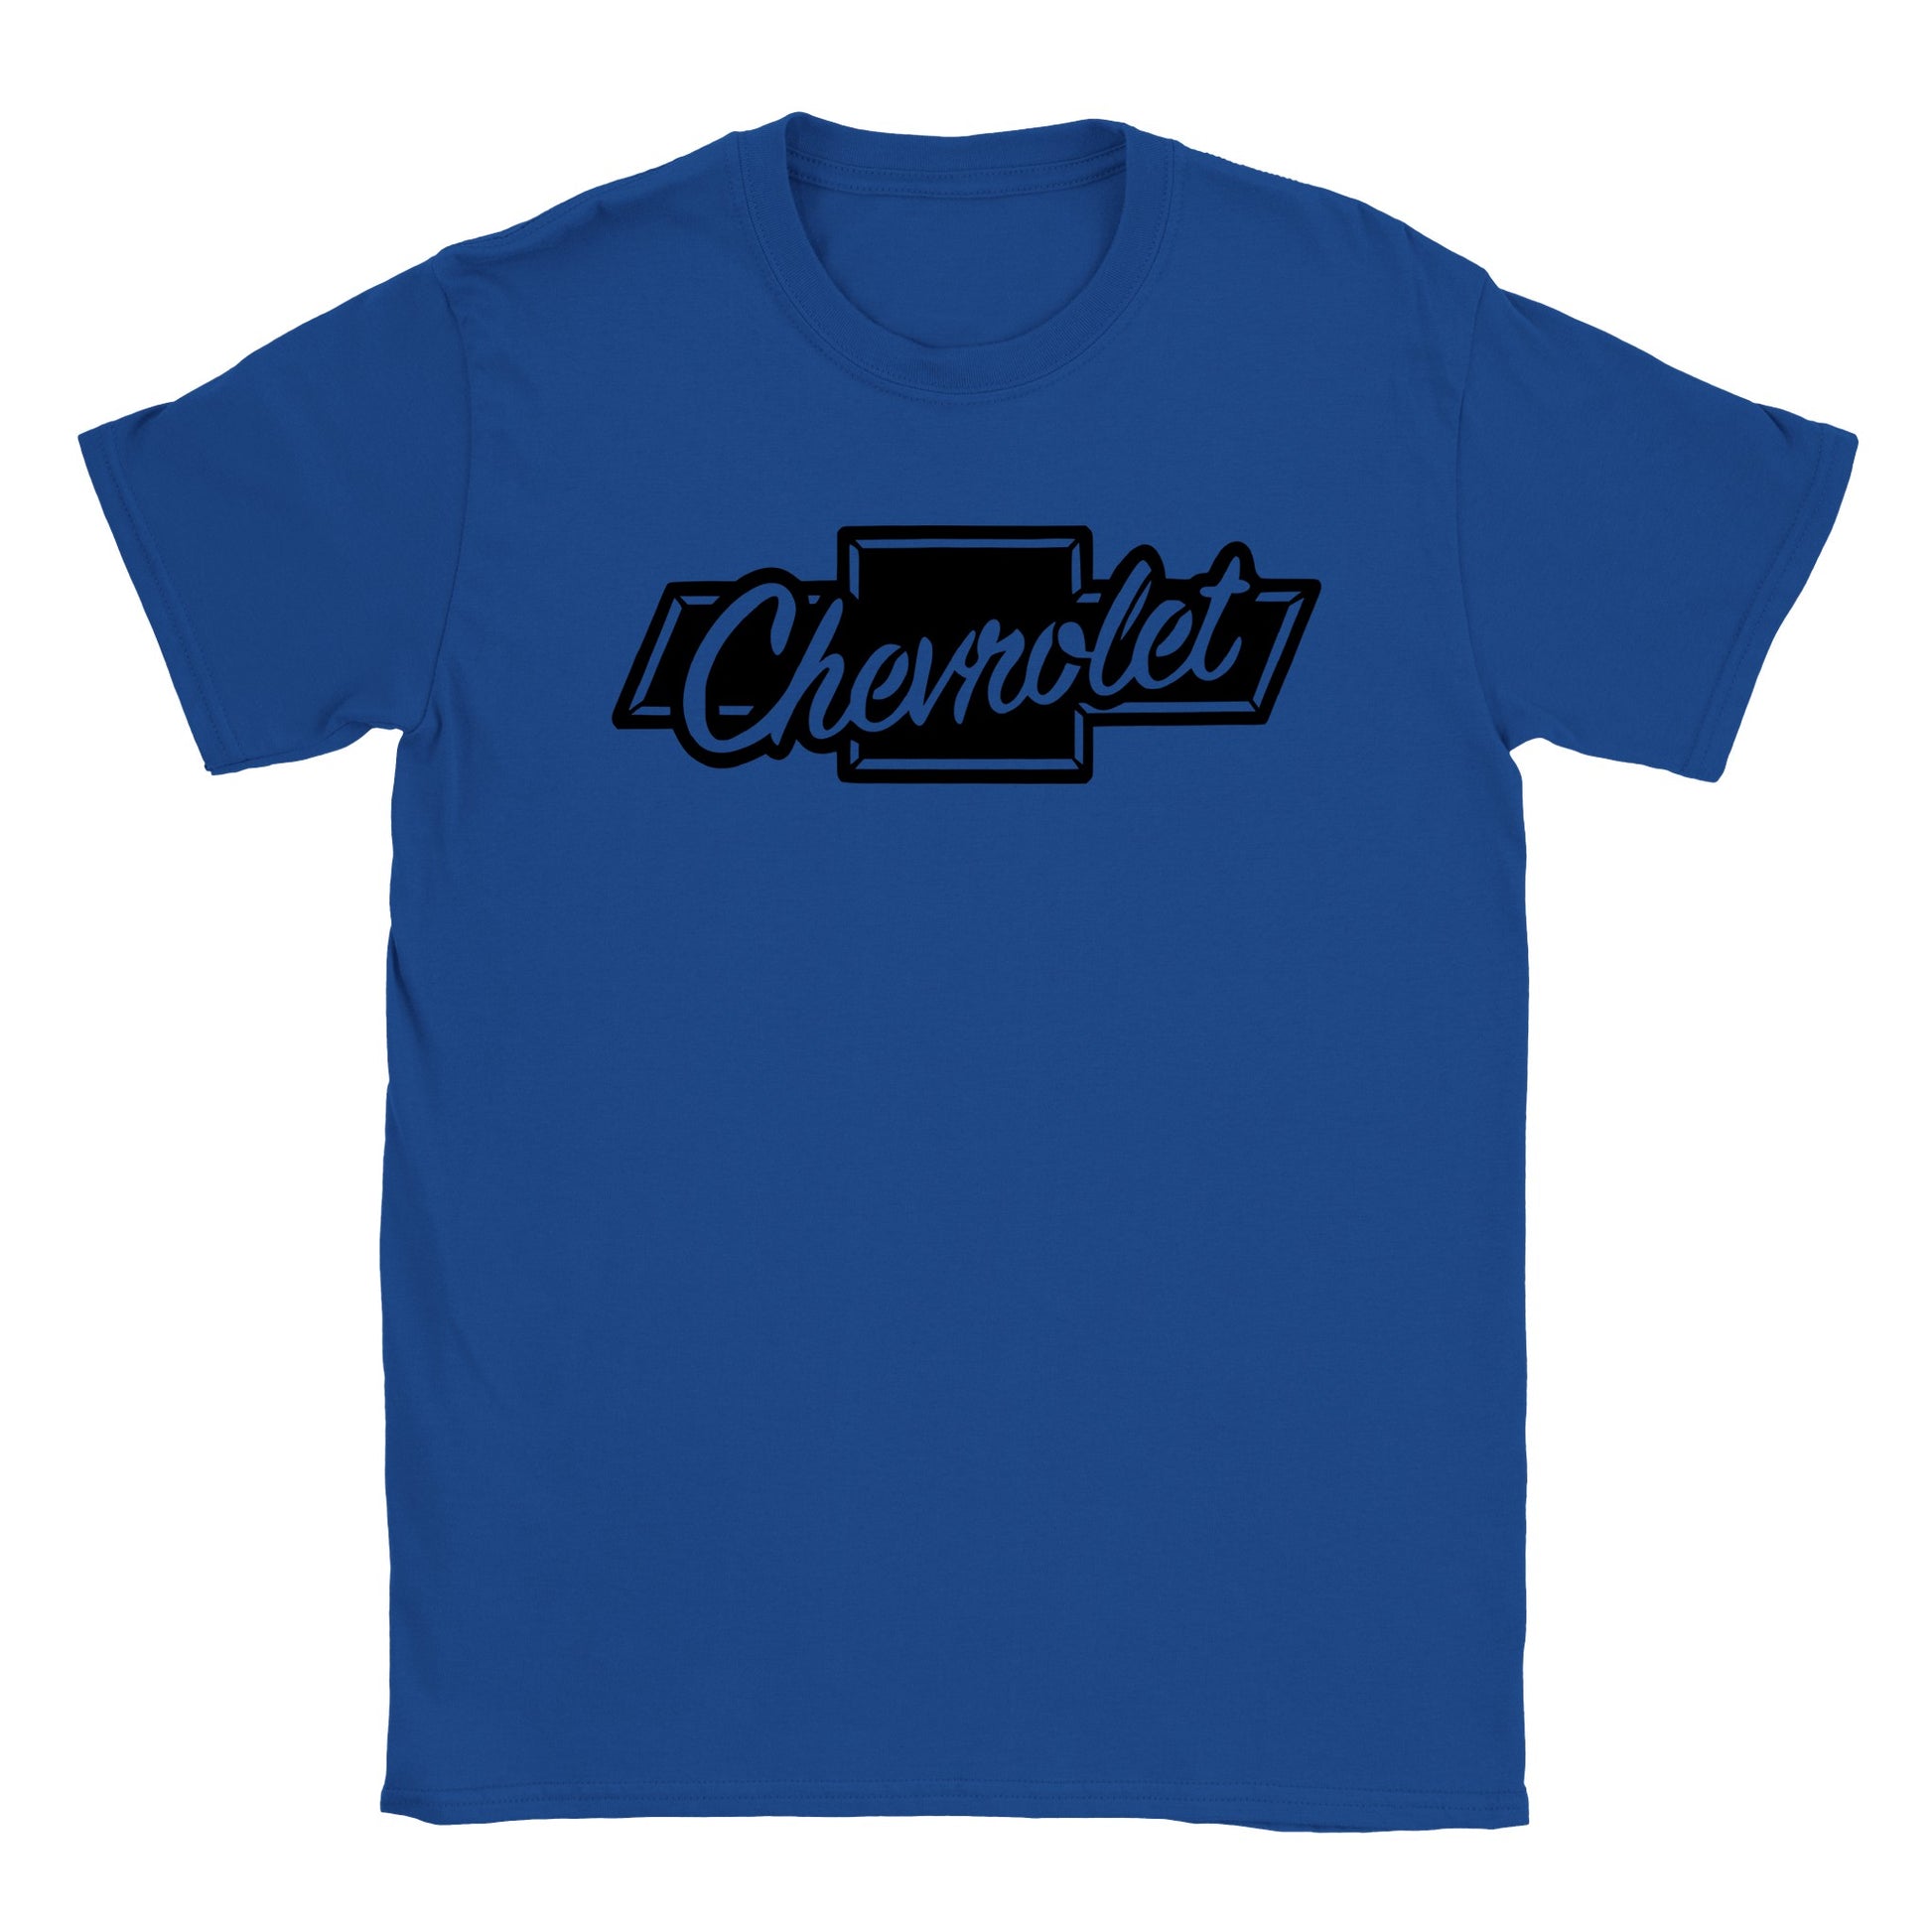 Chevy Emblem and Script T-shirt - Mister Snarky's